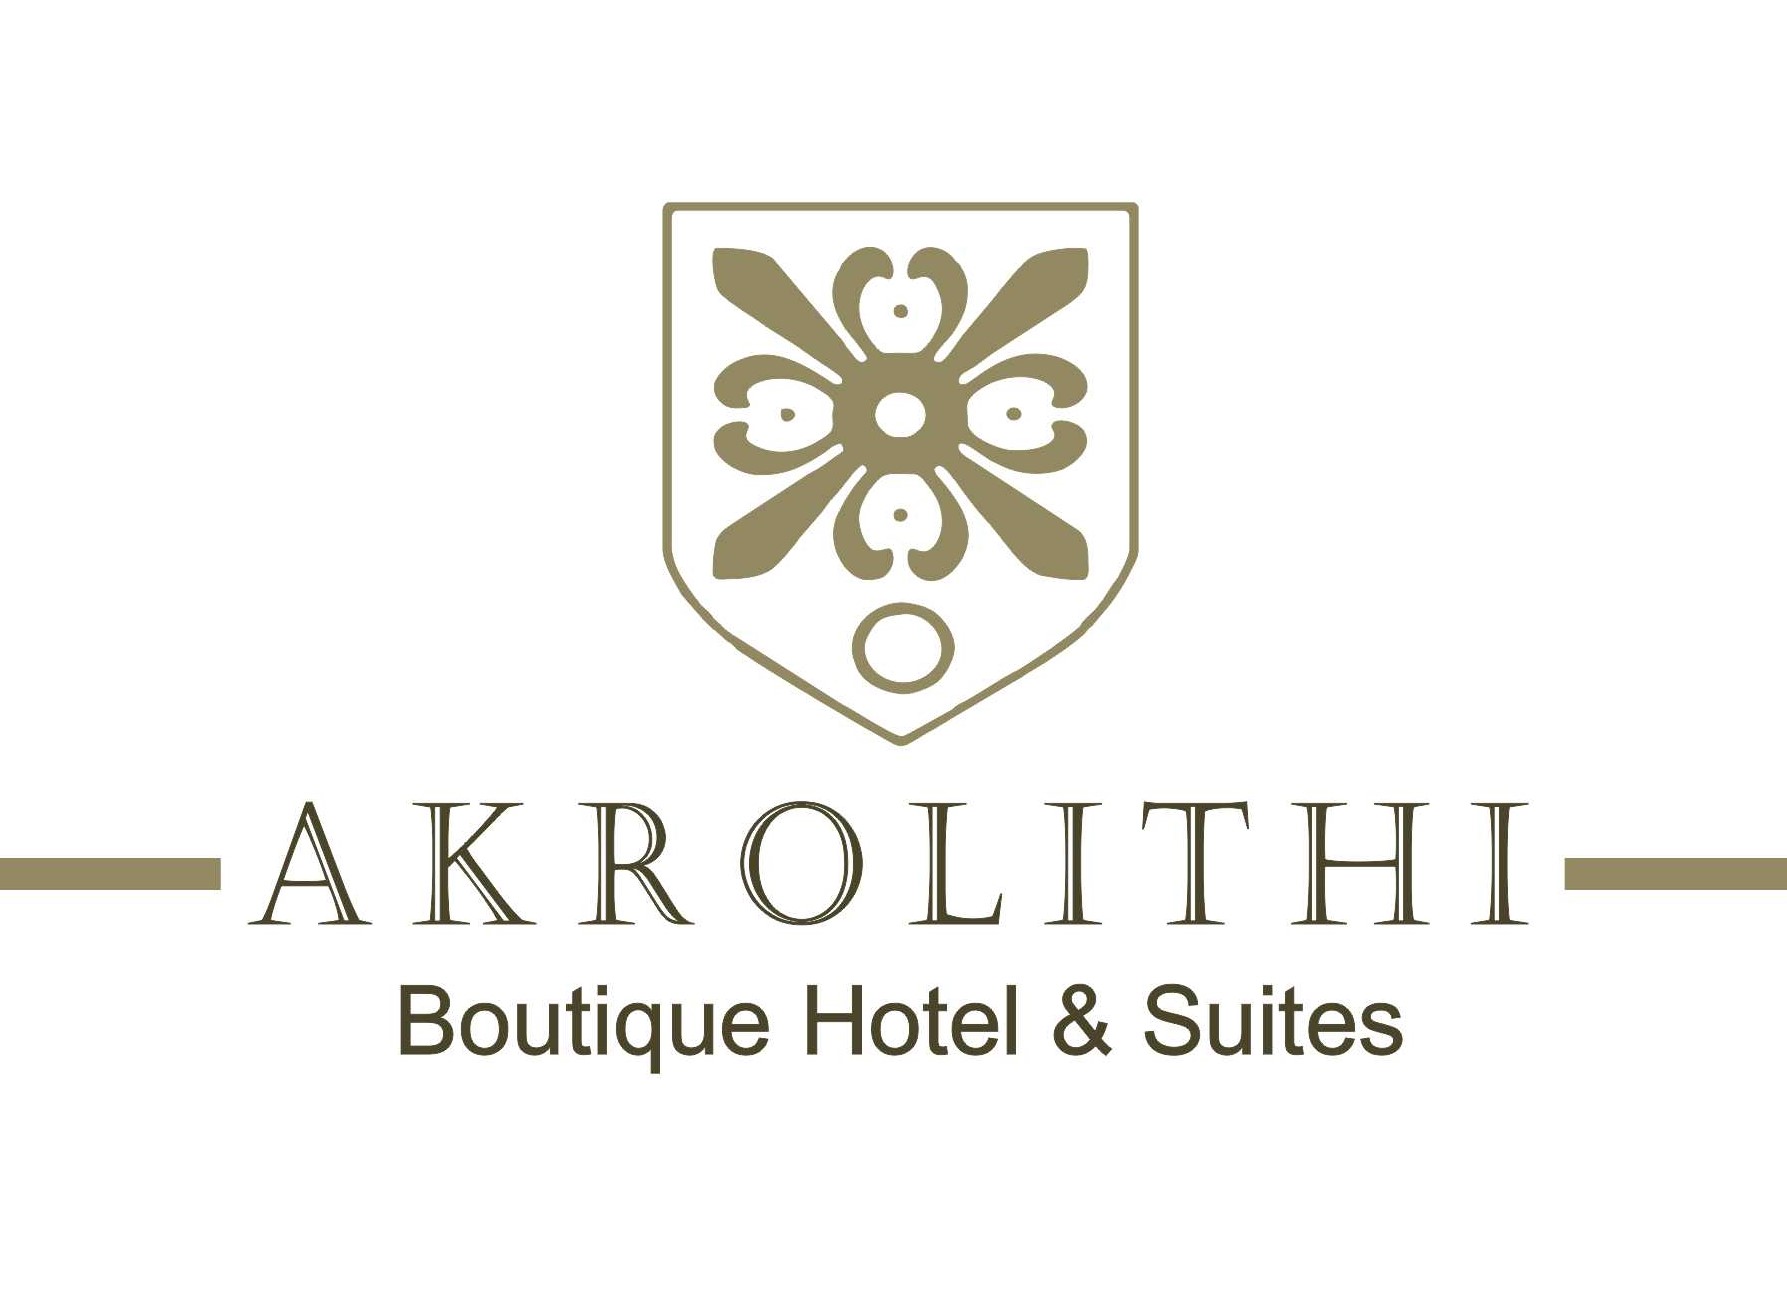 Akrolithi Boutique Hotel